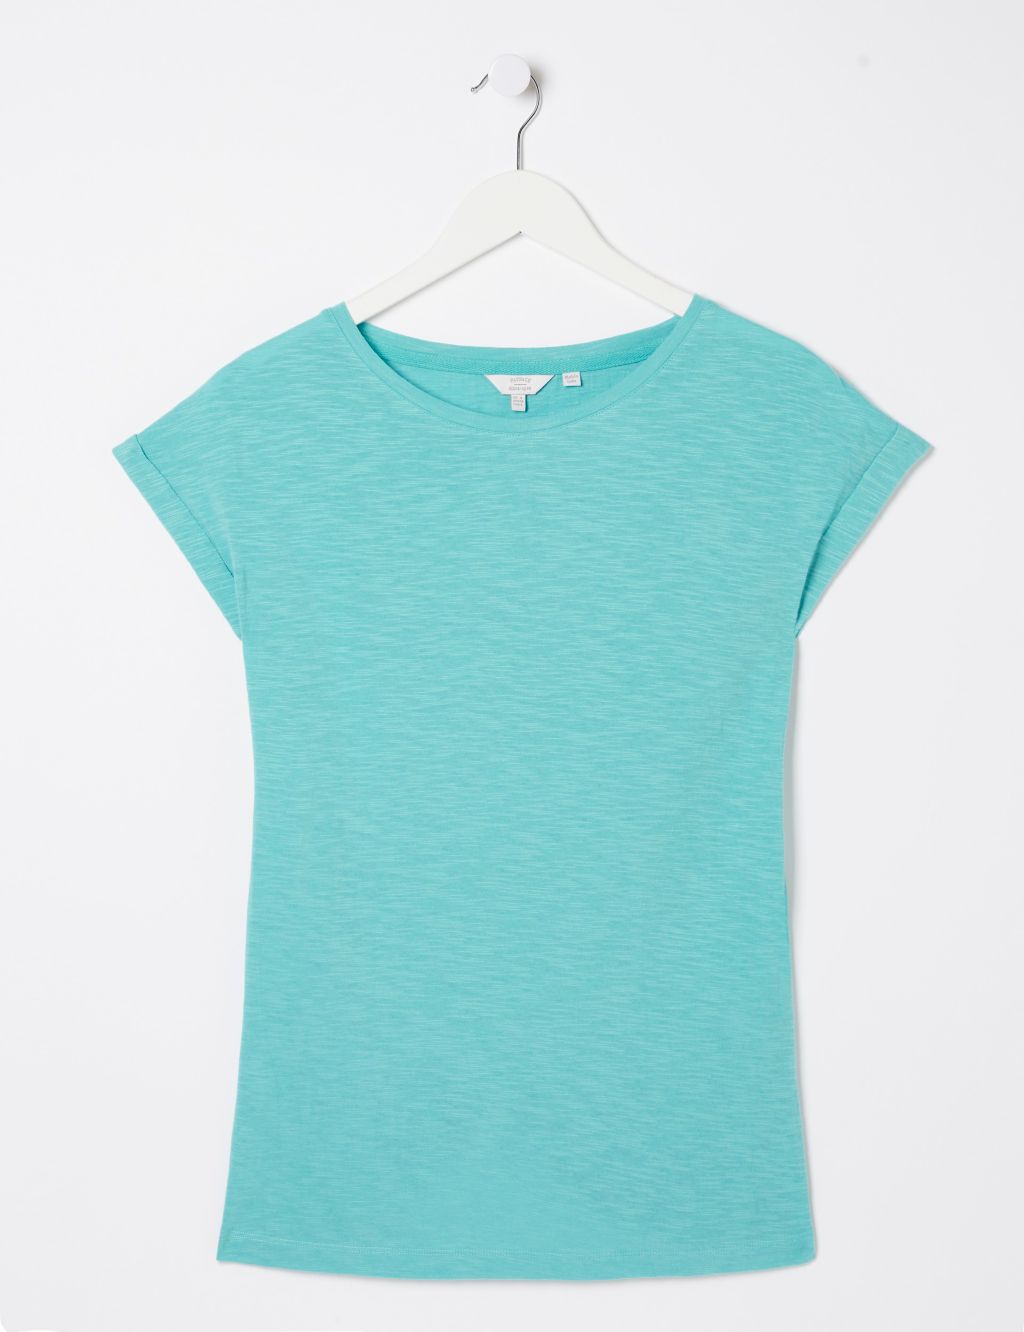 Cotton Modal Blend T-Shirt image 2